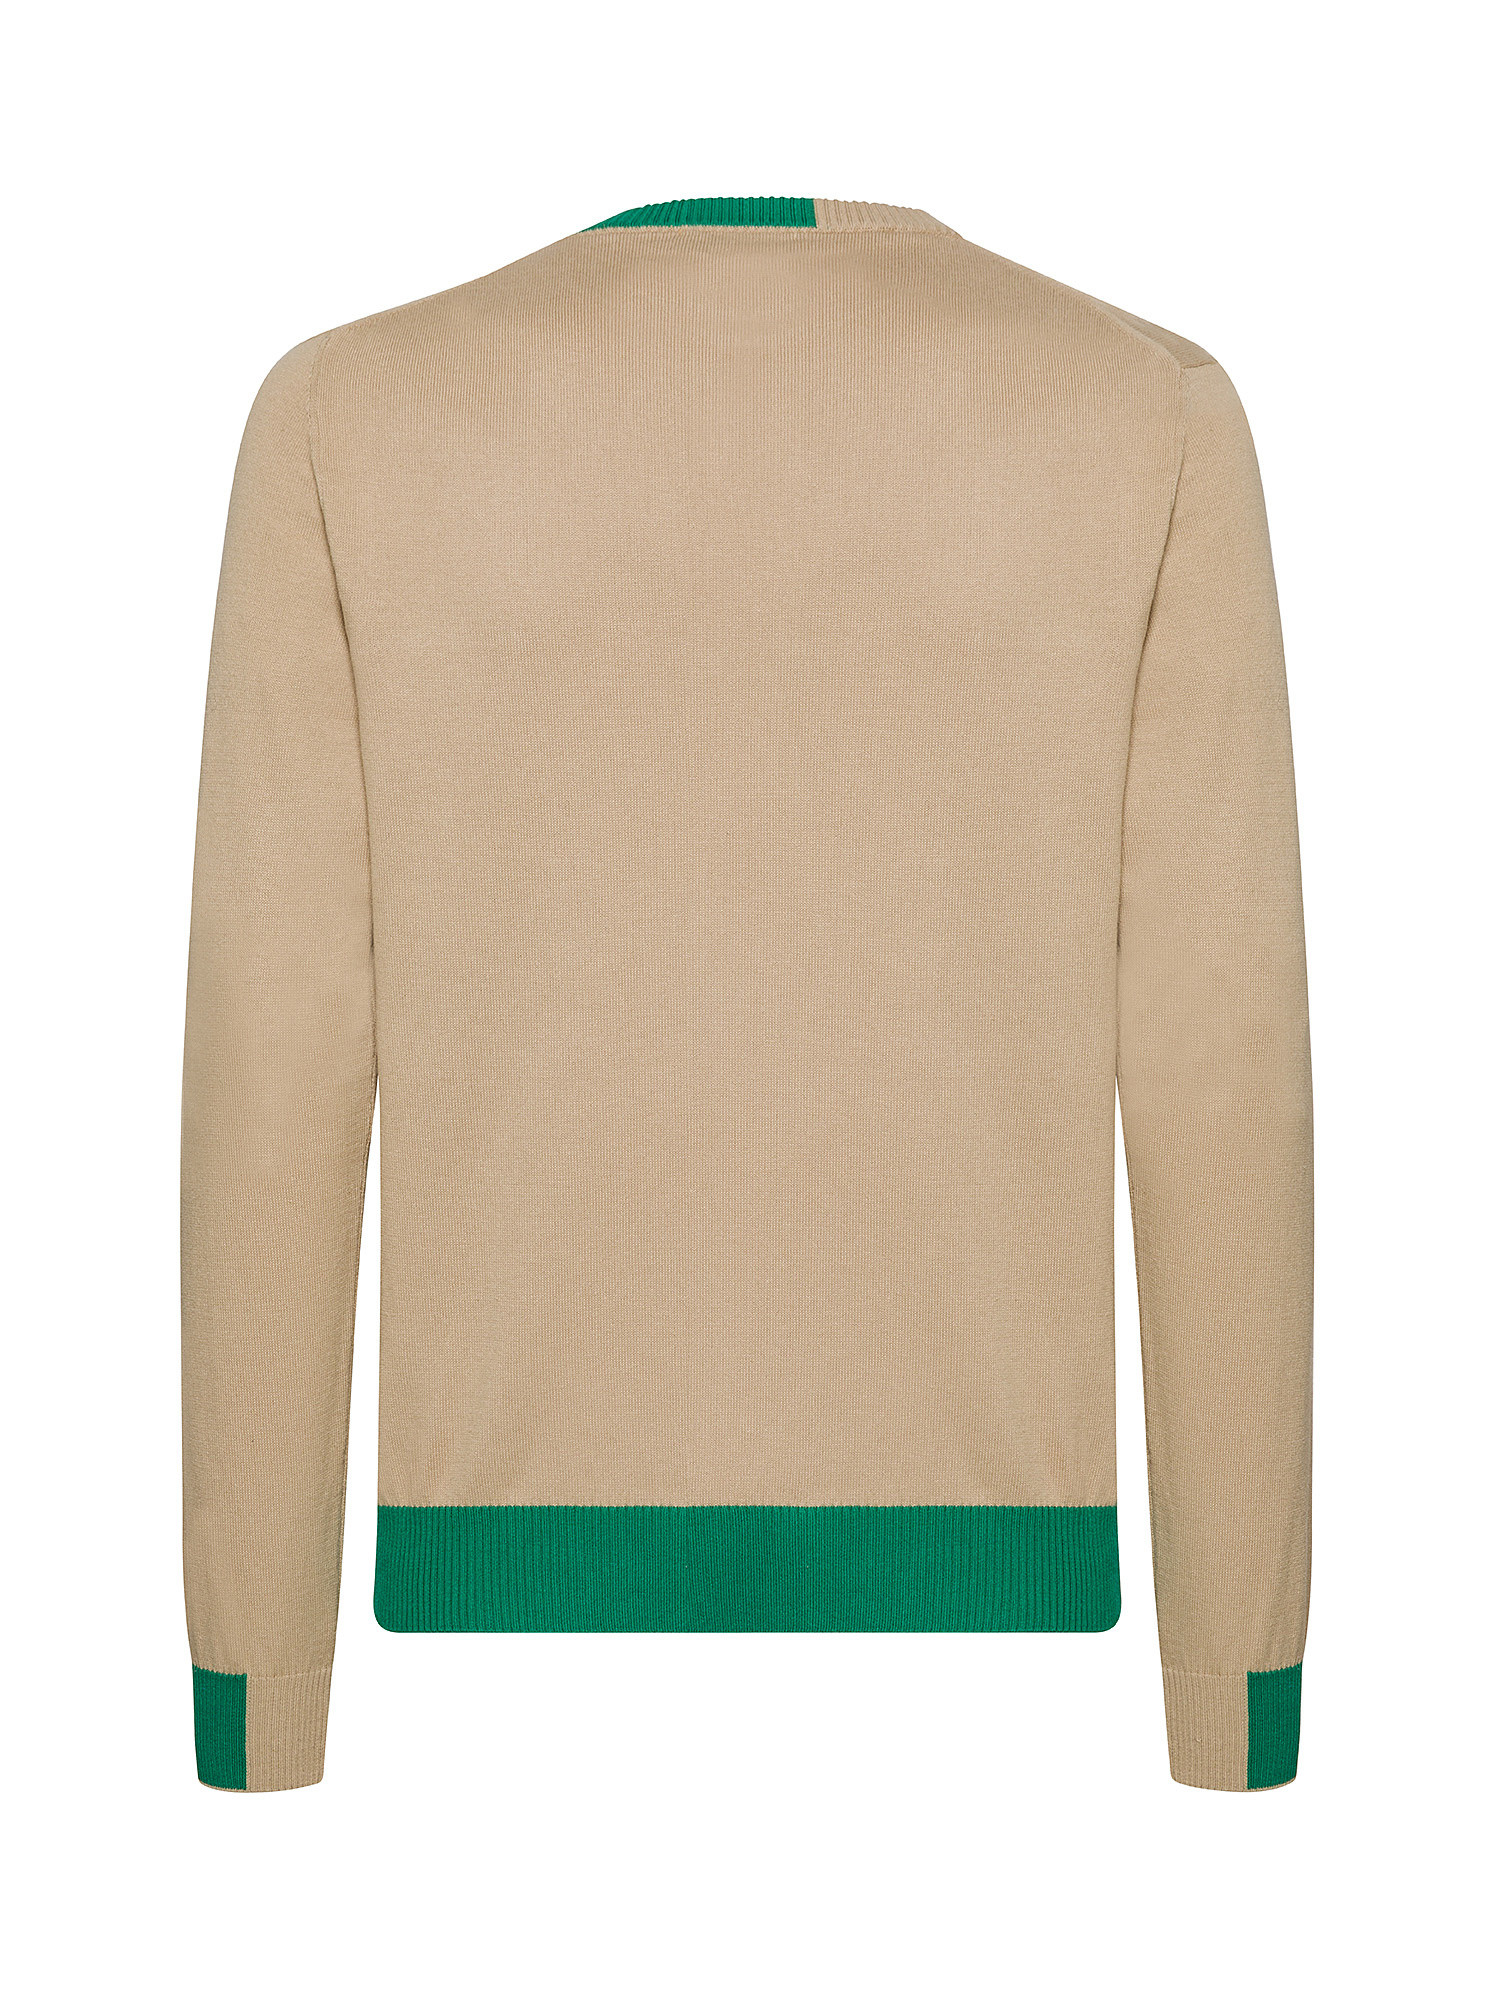 Manuel Ritz - Organic cotton sweater with logo, White, large image number 1